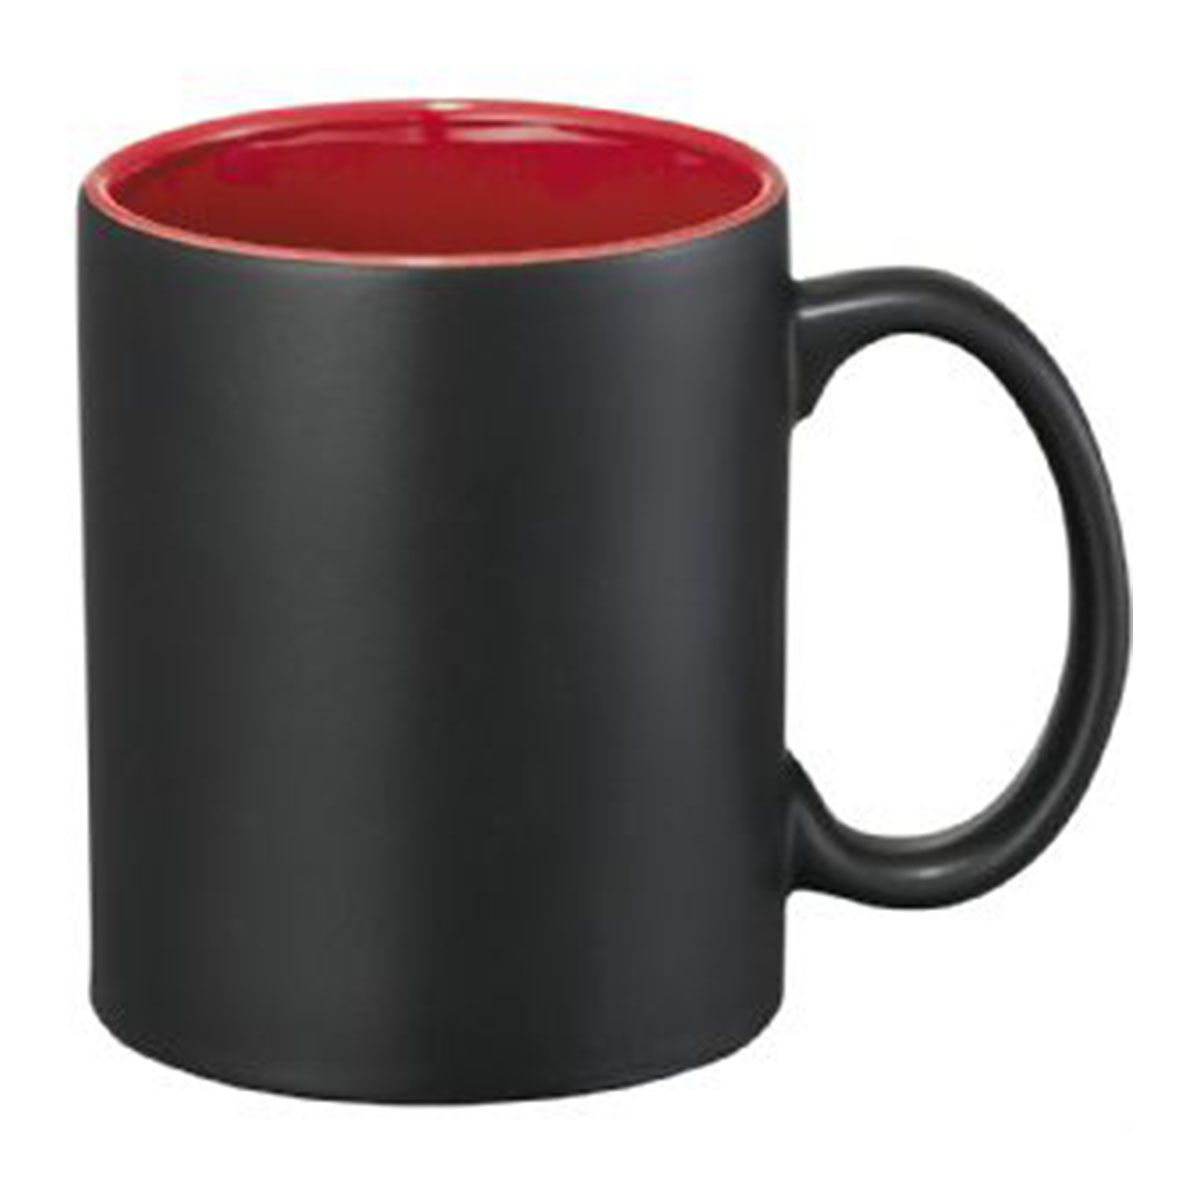 Maya Ceramic Mug-Black and red